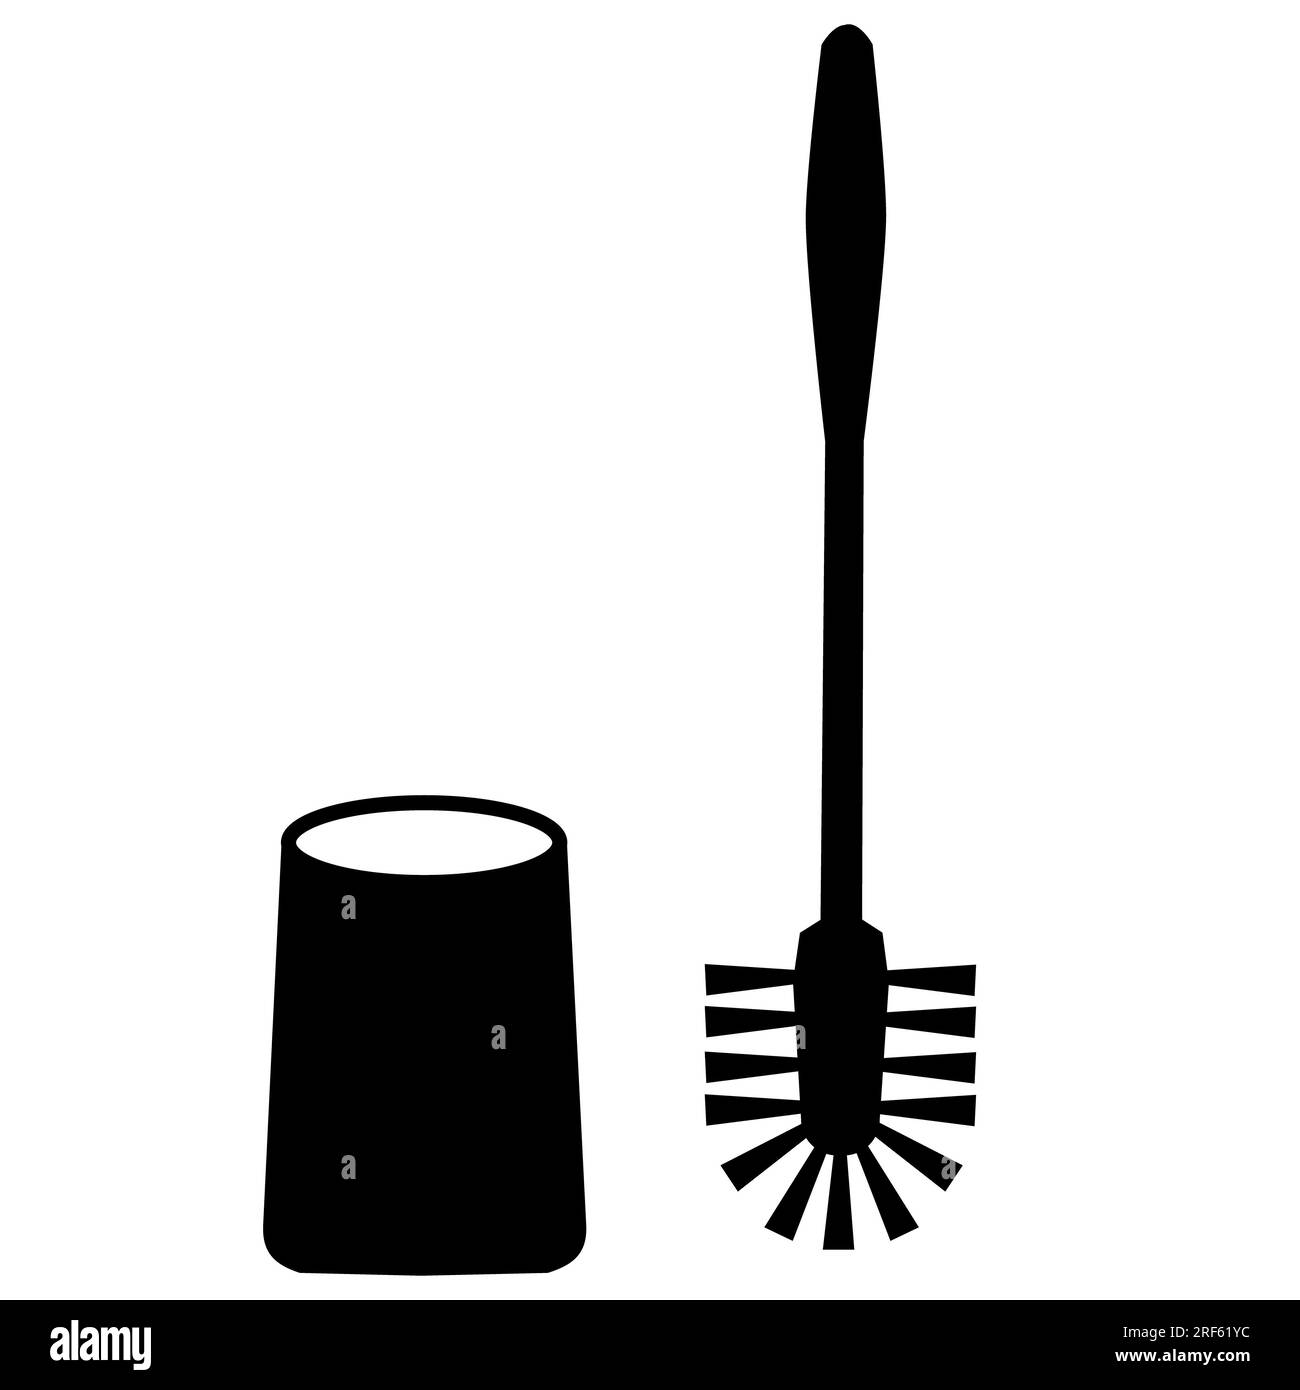 Toilet brush icon. Broom toilet brush sign. Cleaner bathroom symbol. flat style. Stock Photo